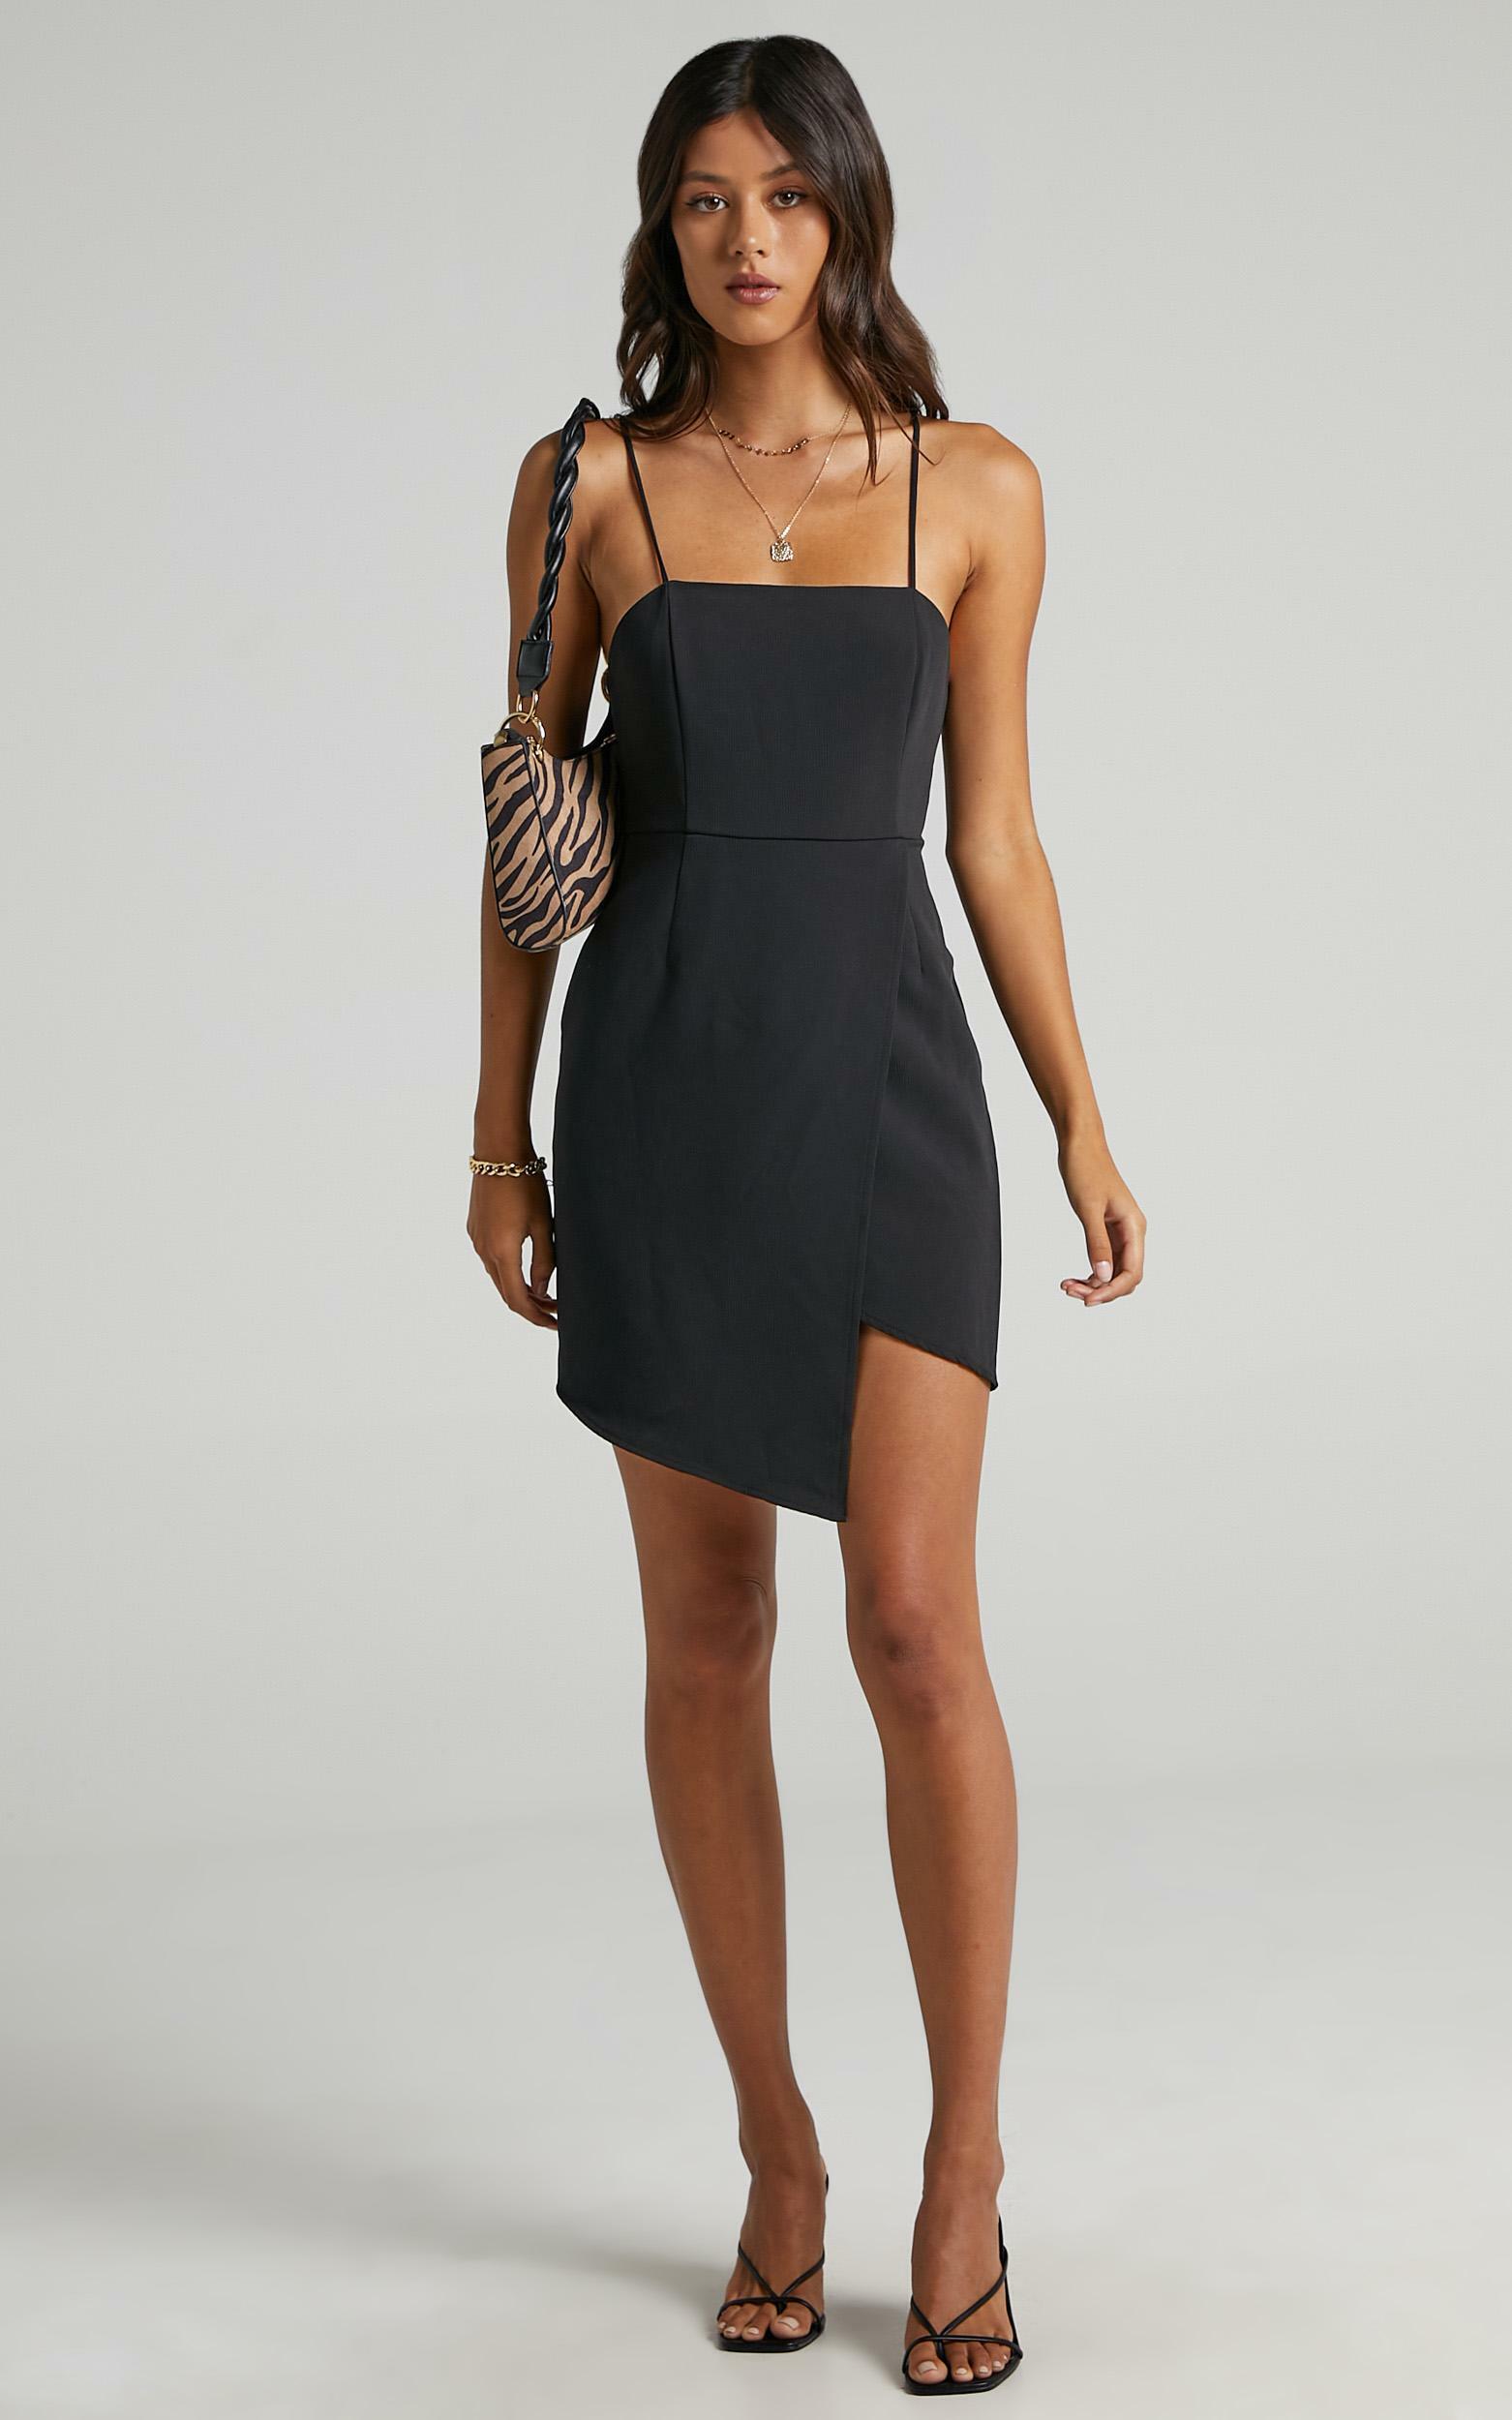 Black Dress - LBD - Pleated Bodycon Mini Dress - Sleeveless Dress